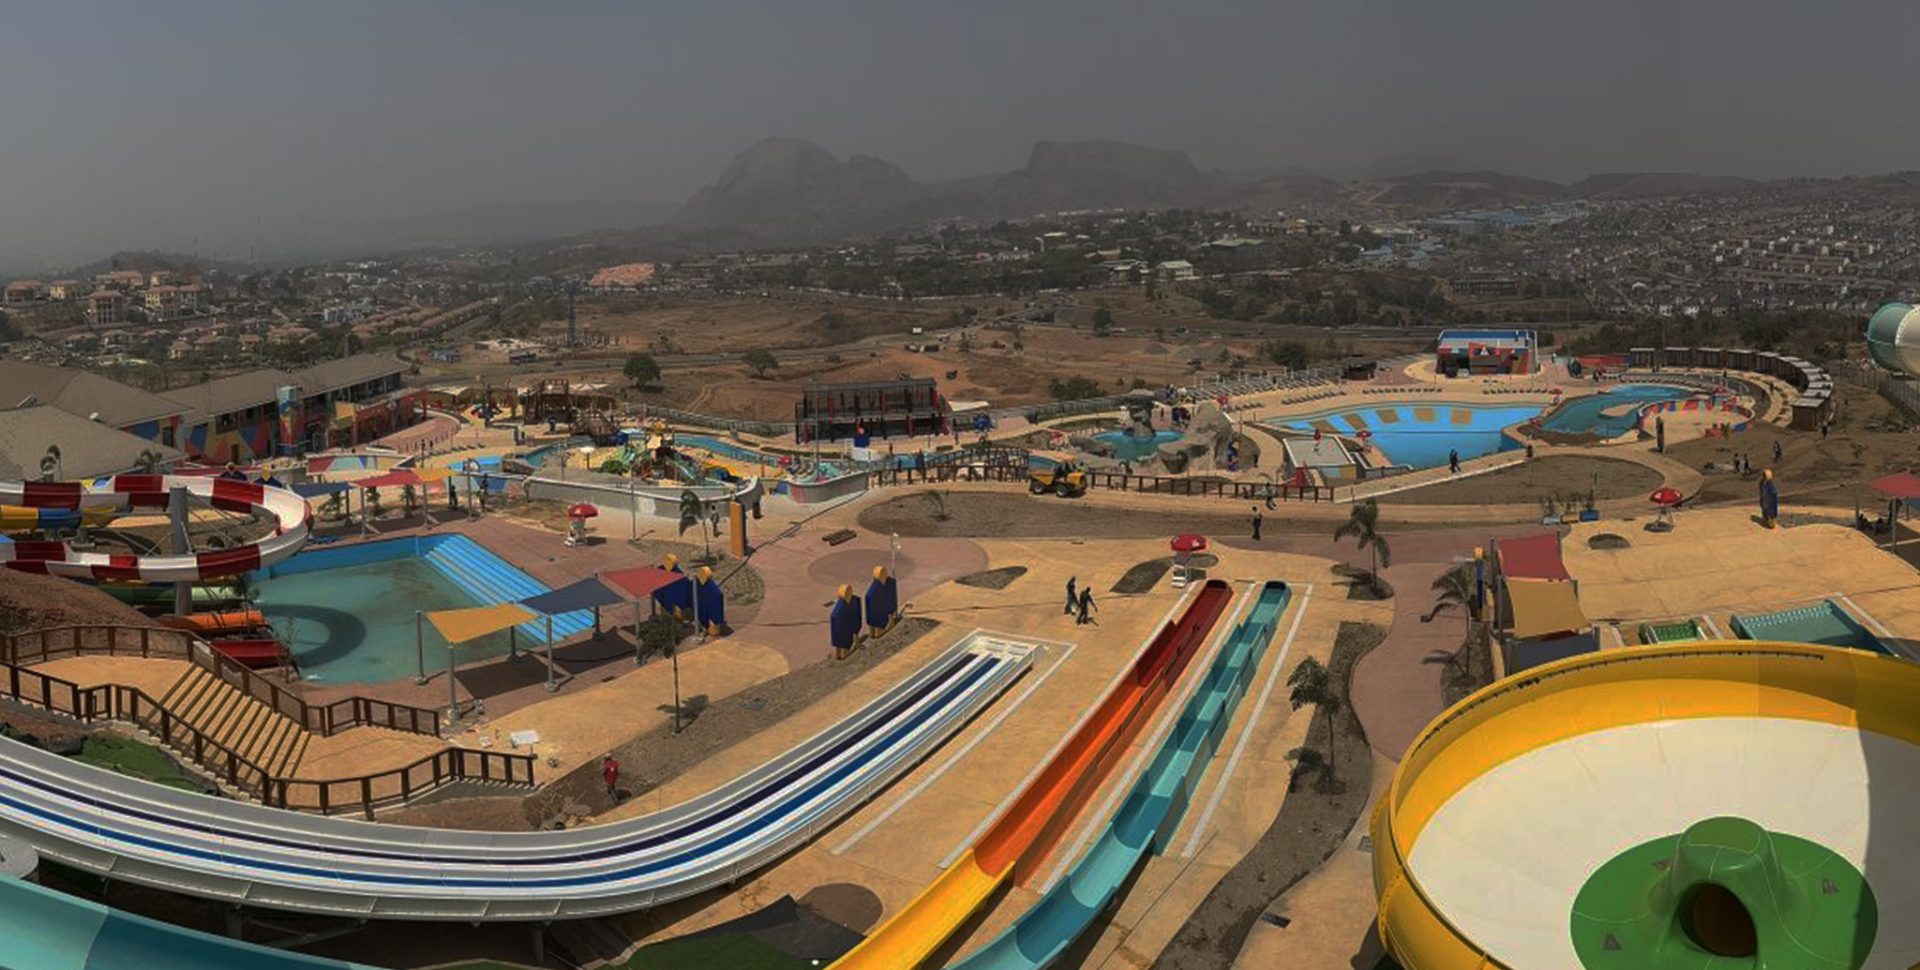 The Sunrise Waterpark Project in Abuja, Nigeria